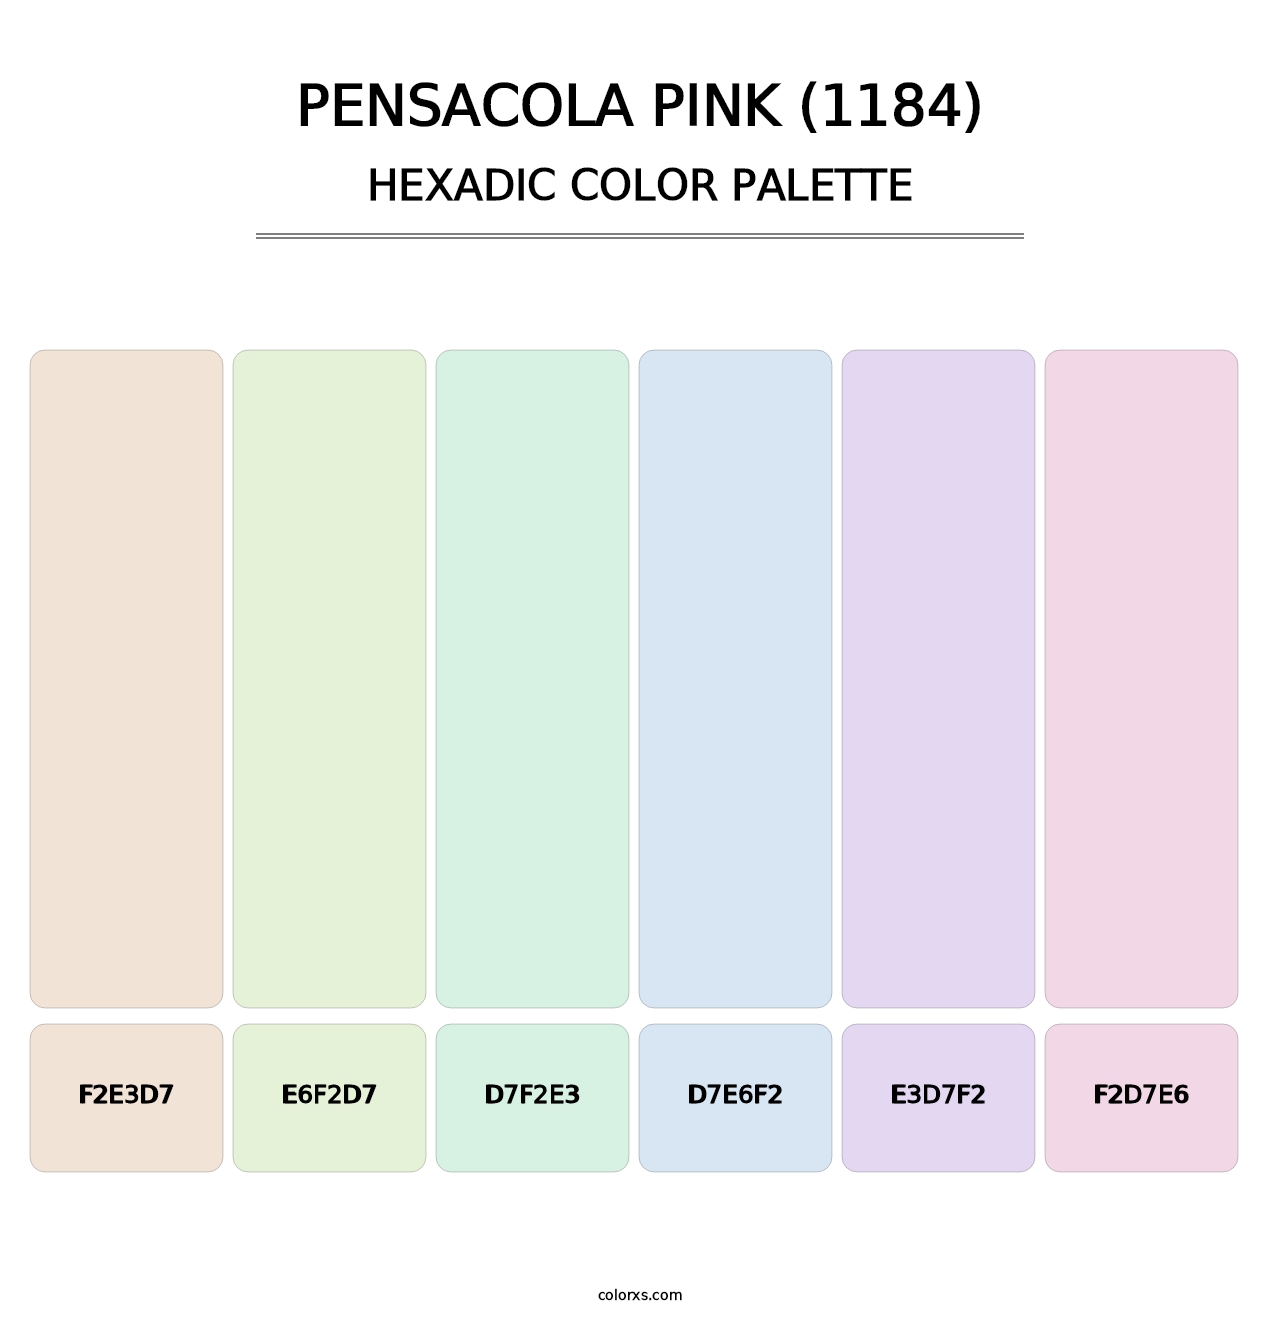 Pensacola Pink (1184) - Hexadic Color Palette